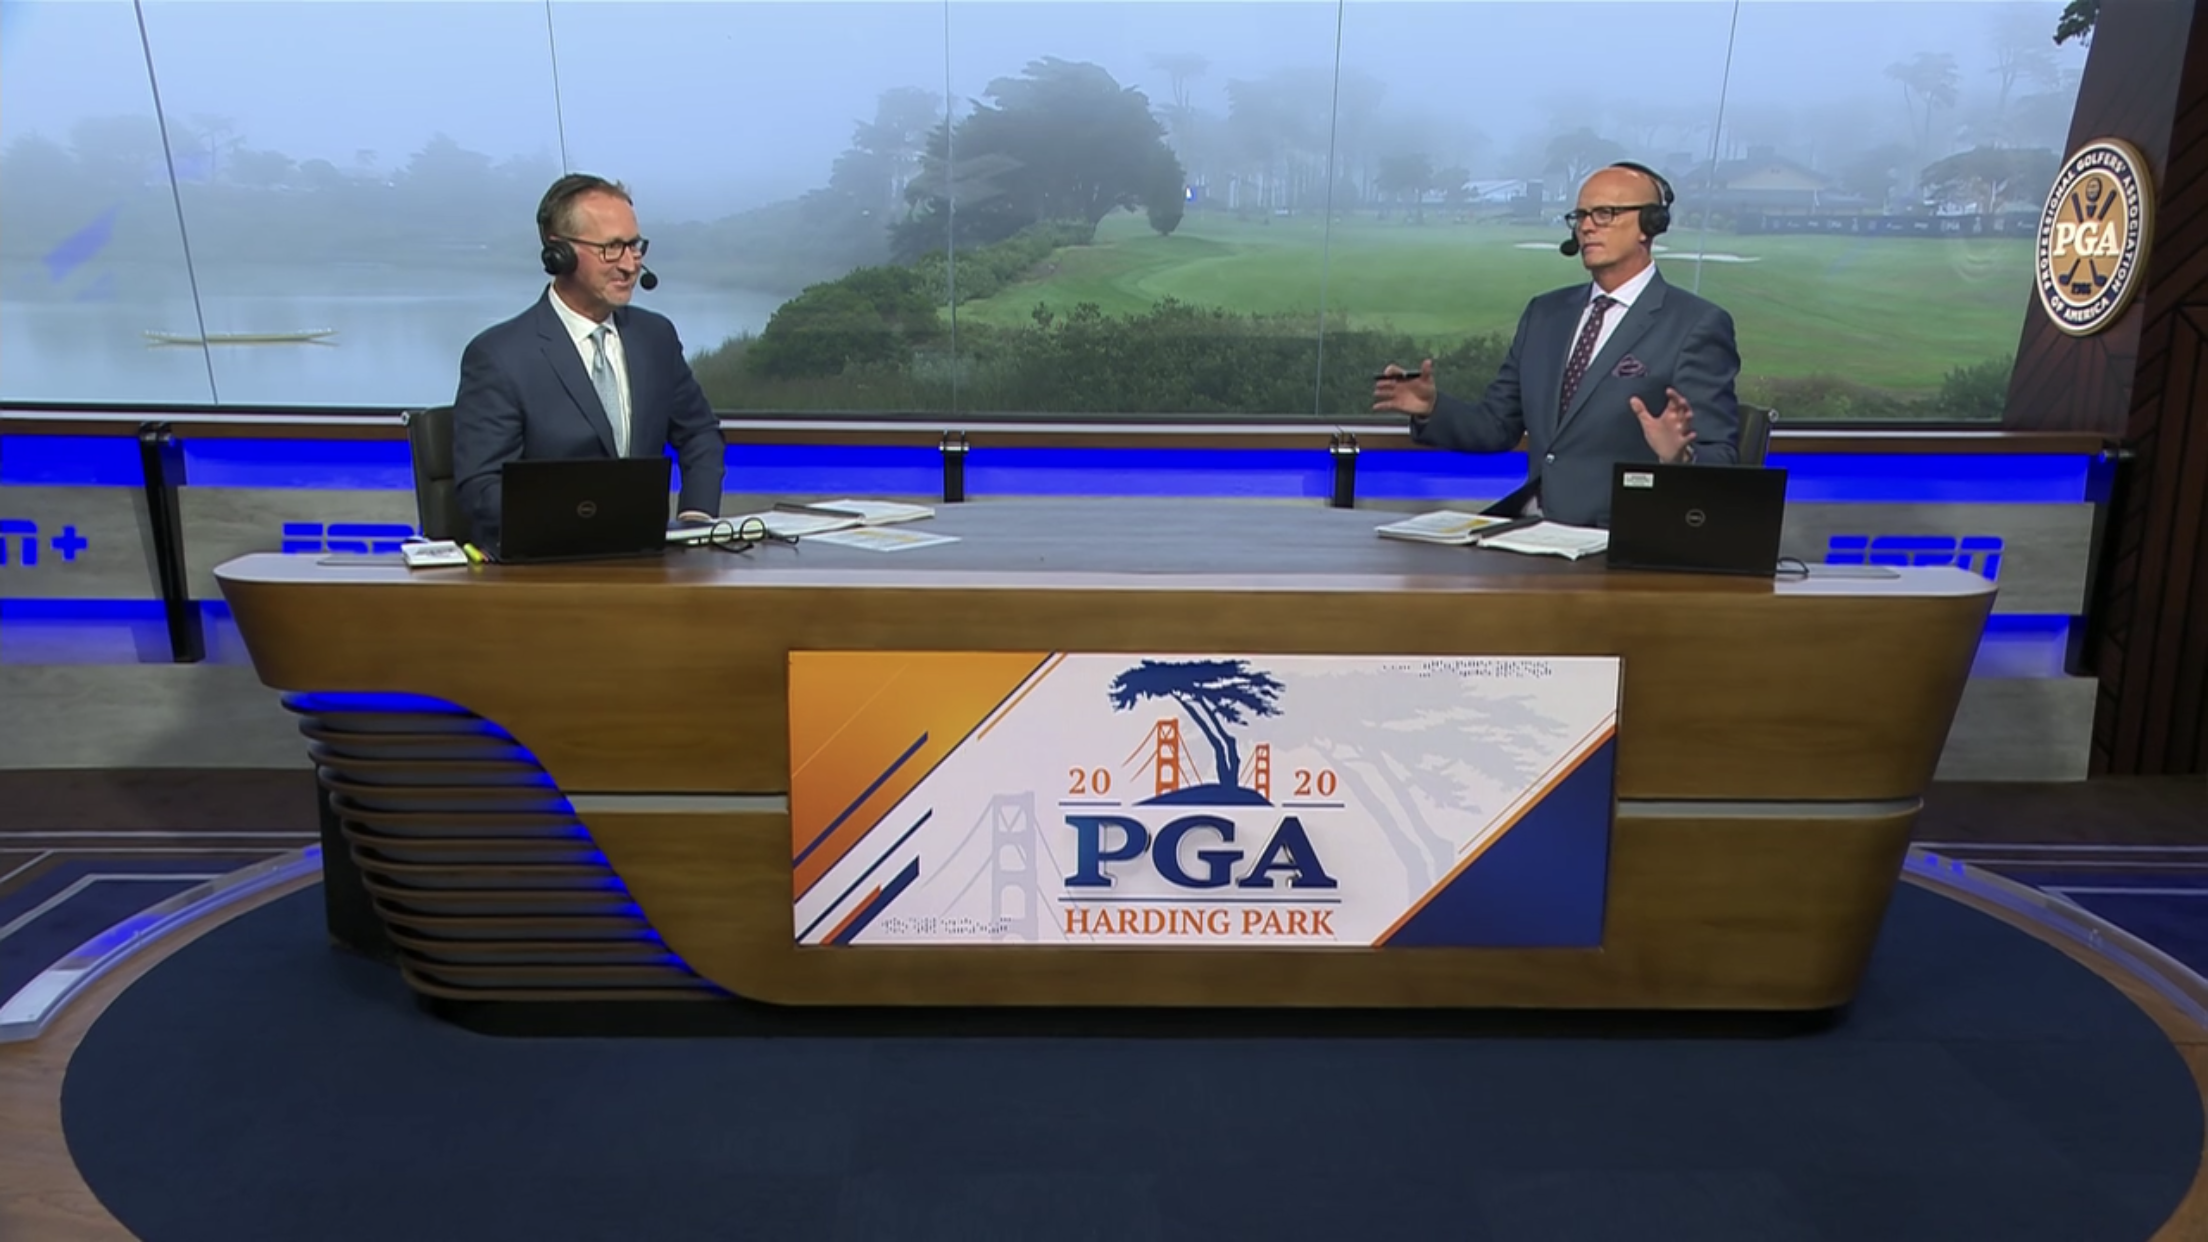 ESPNs PGA Championship Current Deal Debut Kicks Off to Rave Reviews, Viewership Milestones